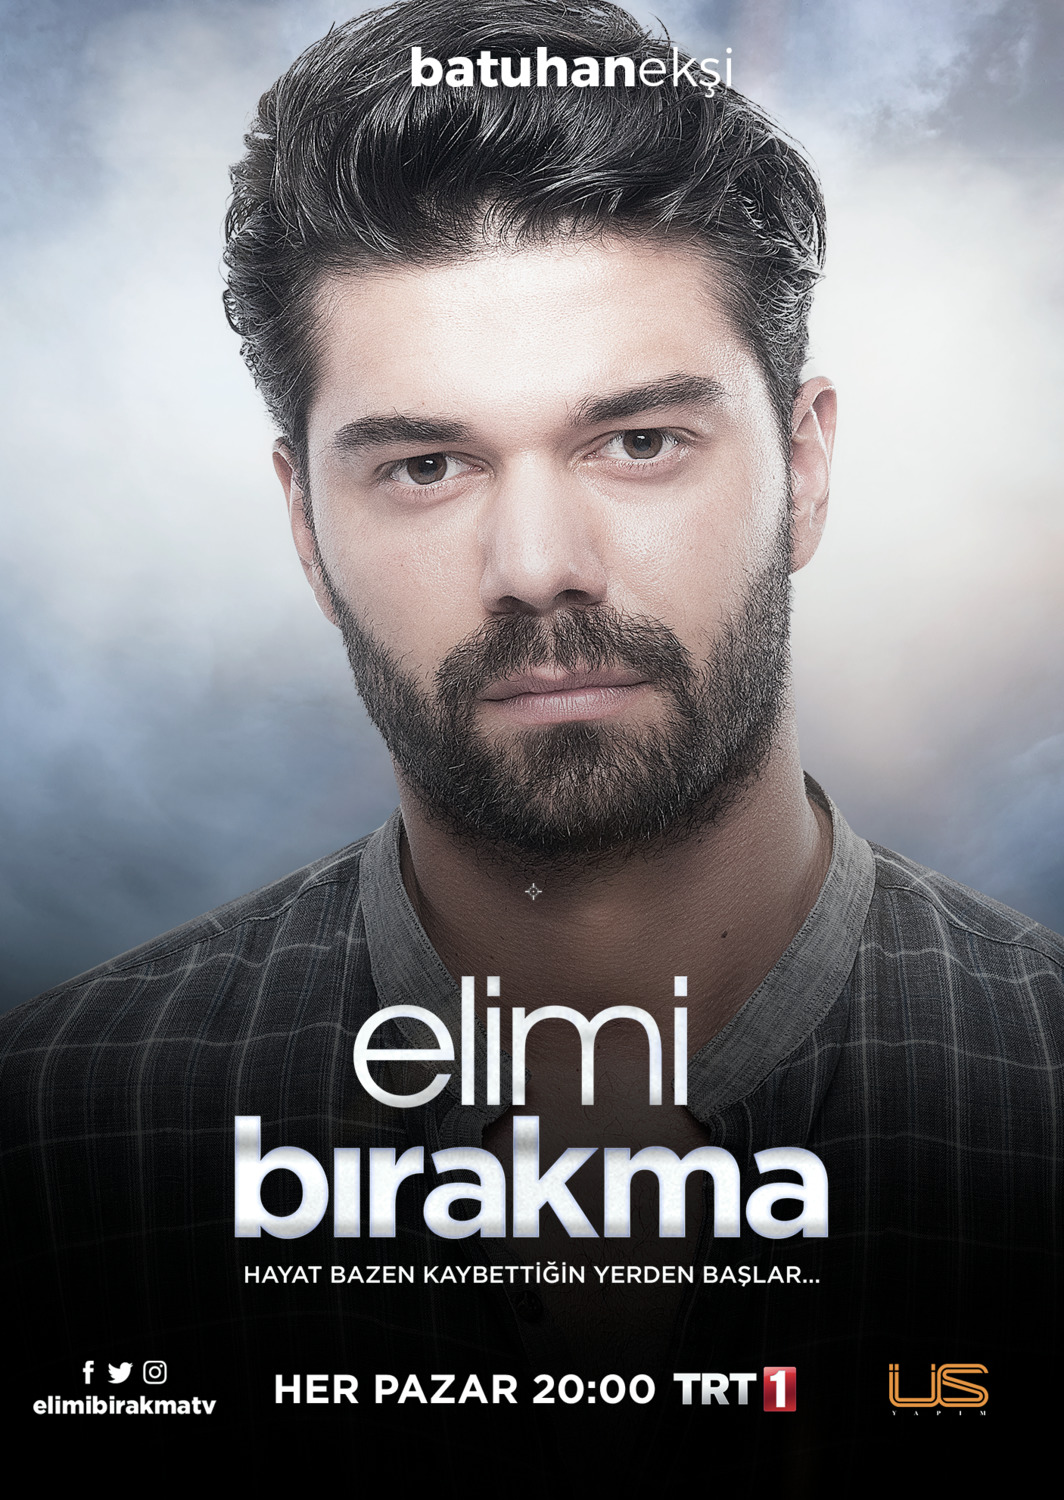 Extra Large TV Poster Image for Elimi birakma (#19 of 20)